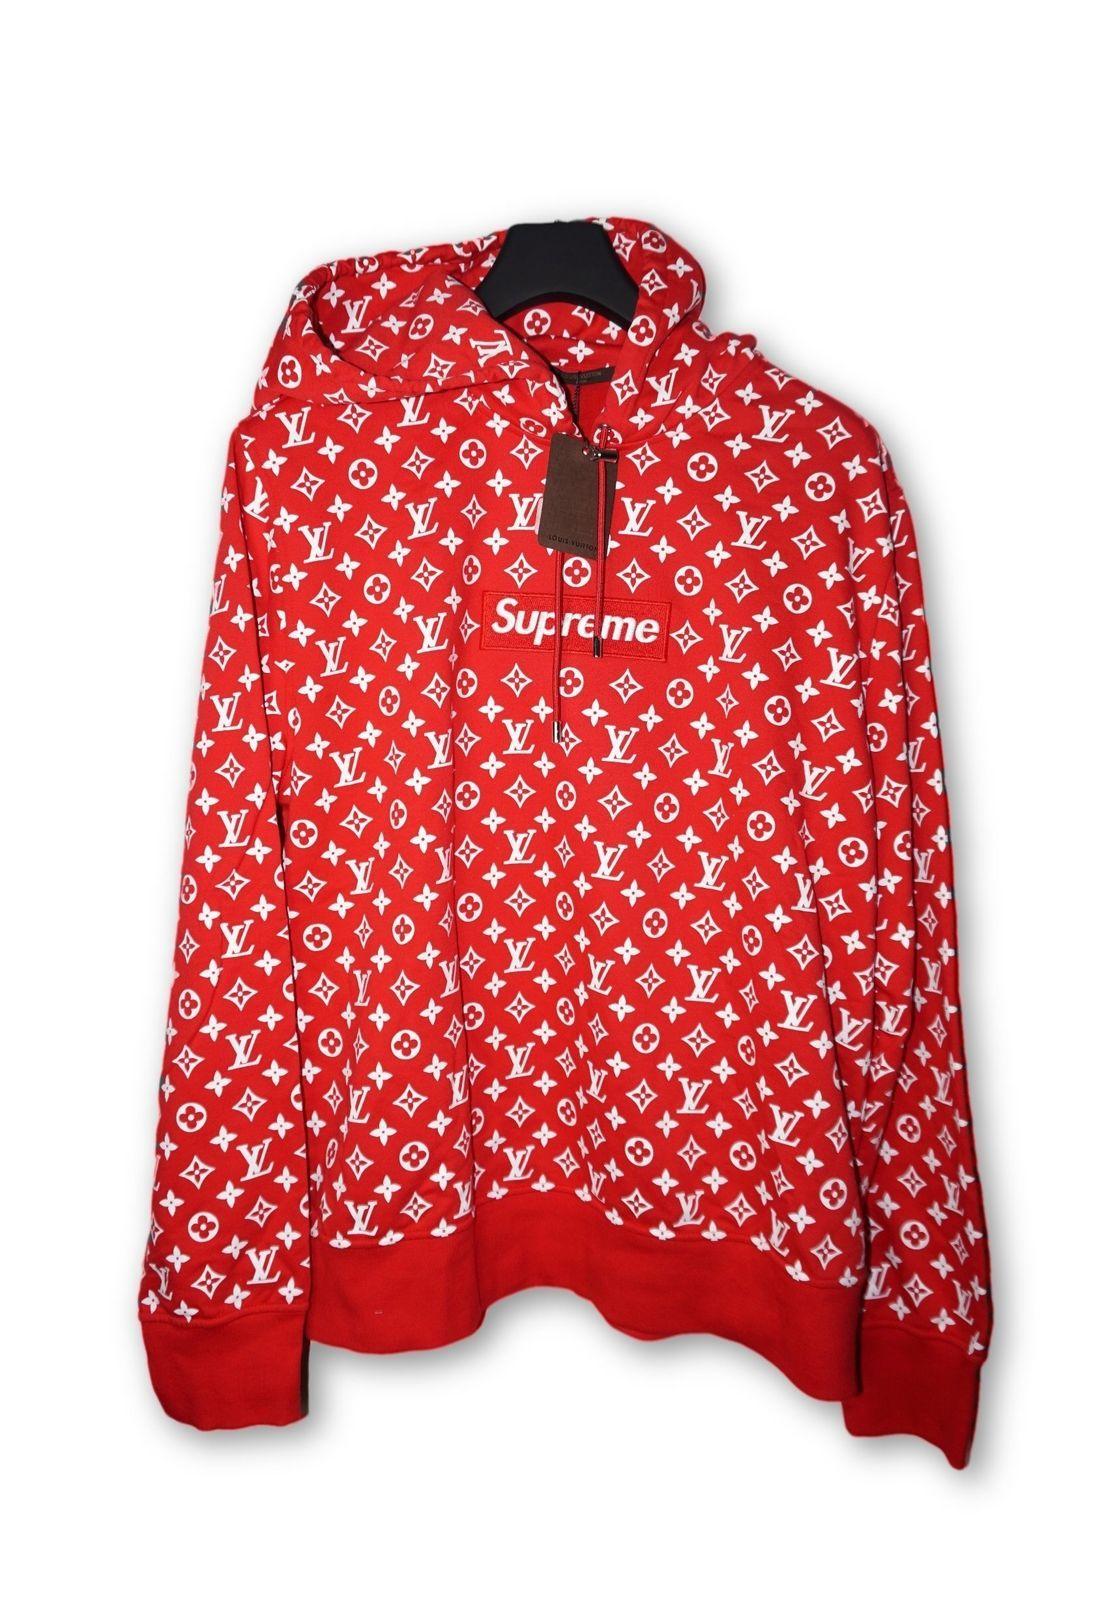 Supreme X Louis Vuitton Logo - Supreme x Louis Vuitton Monogram Box Logo Hooded Sweatshirt | eBay